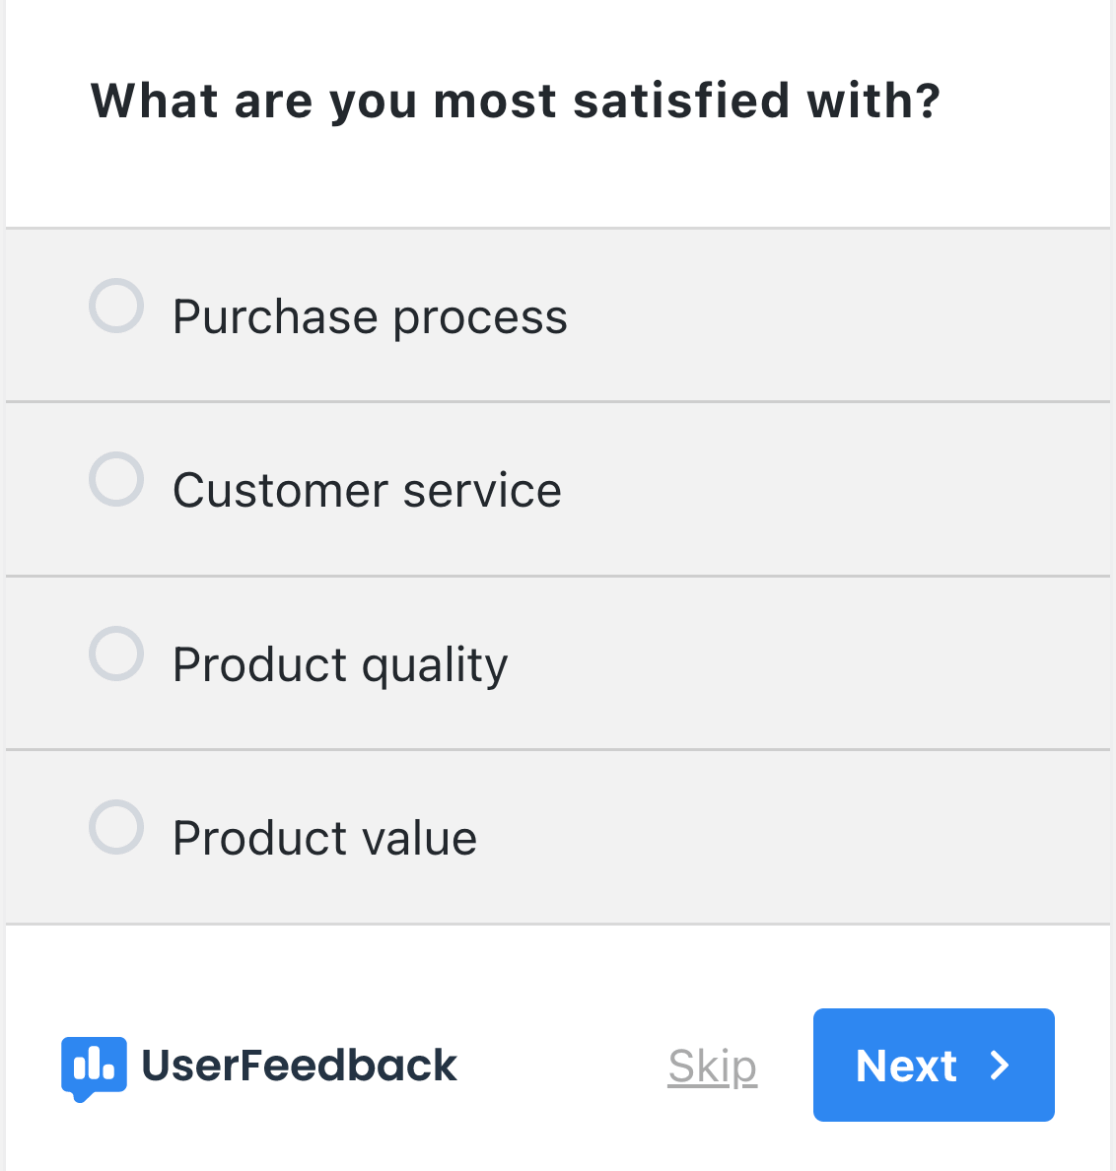 UserFeedback customer satisfaction survey template - multiple choice